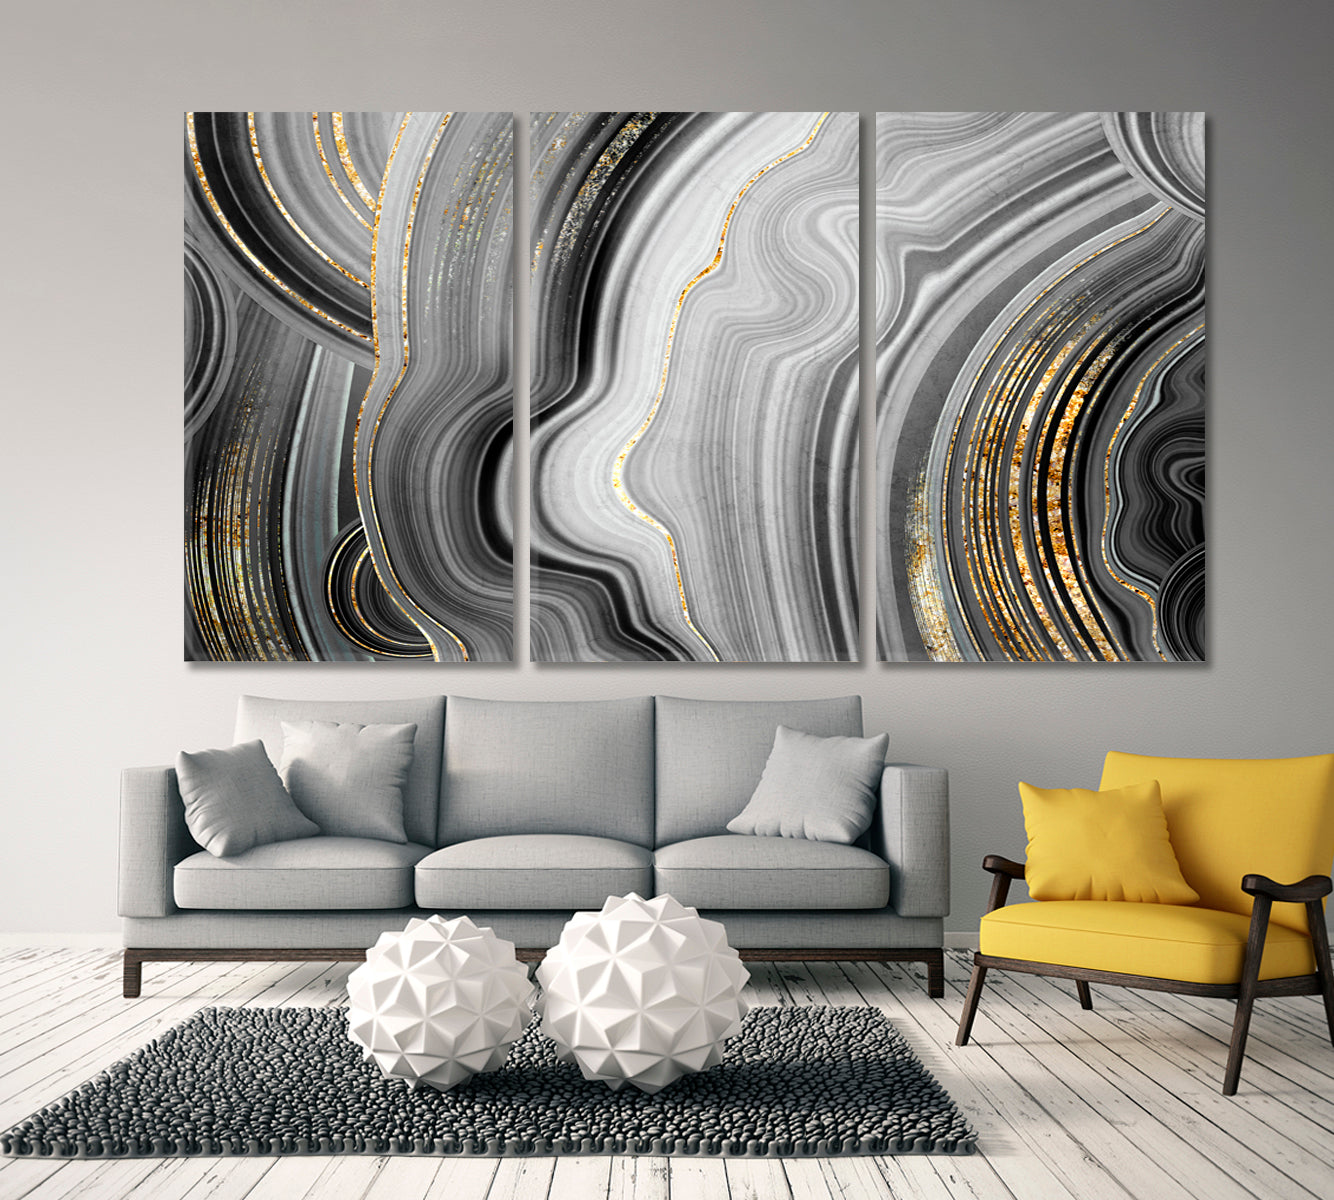 MARBLE EFFECT series GREY BLACK & Gold Abstract Swirl Artistic Design Giclée Print Fluid Art, Oriental Marbling Canvas Print Artesty 3 panels 36" x 24" 